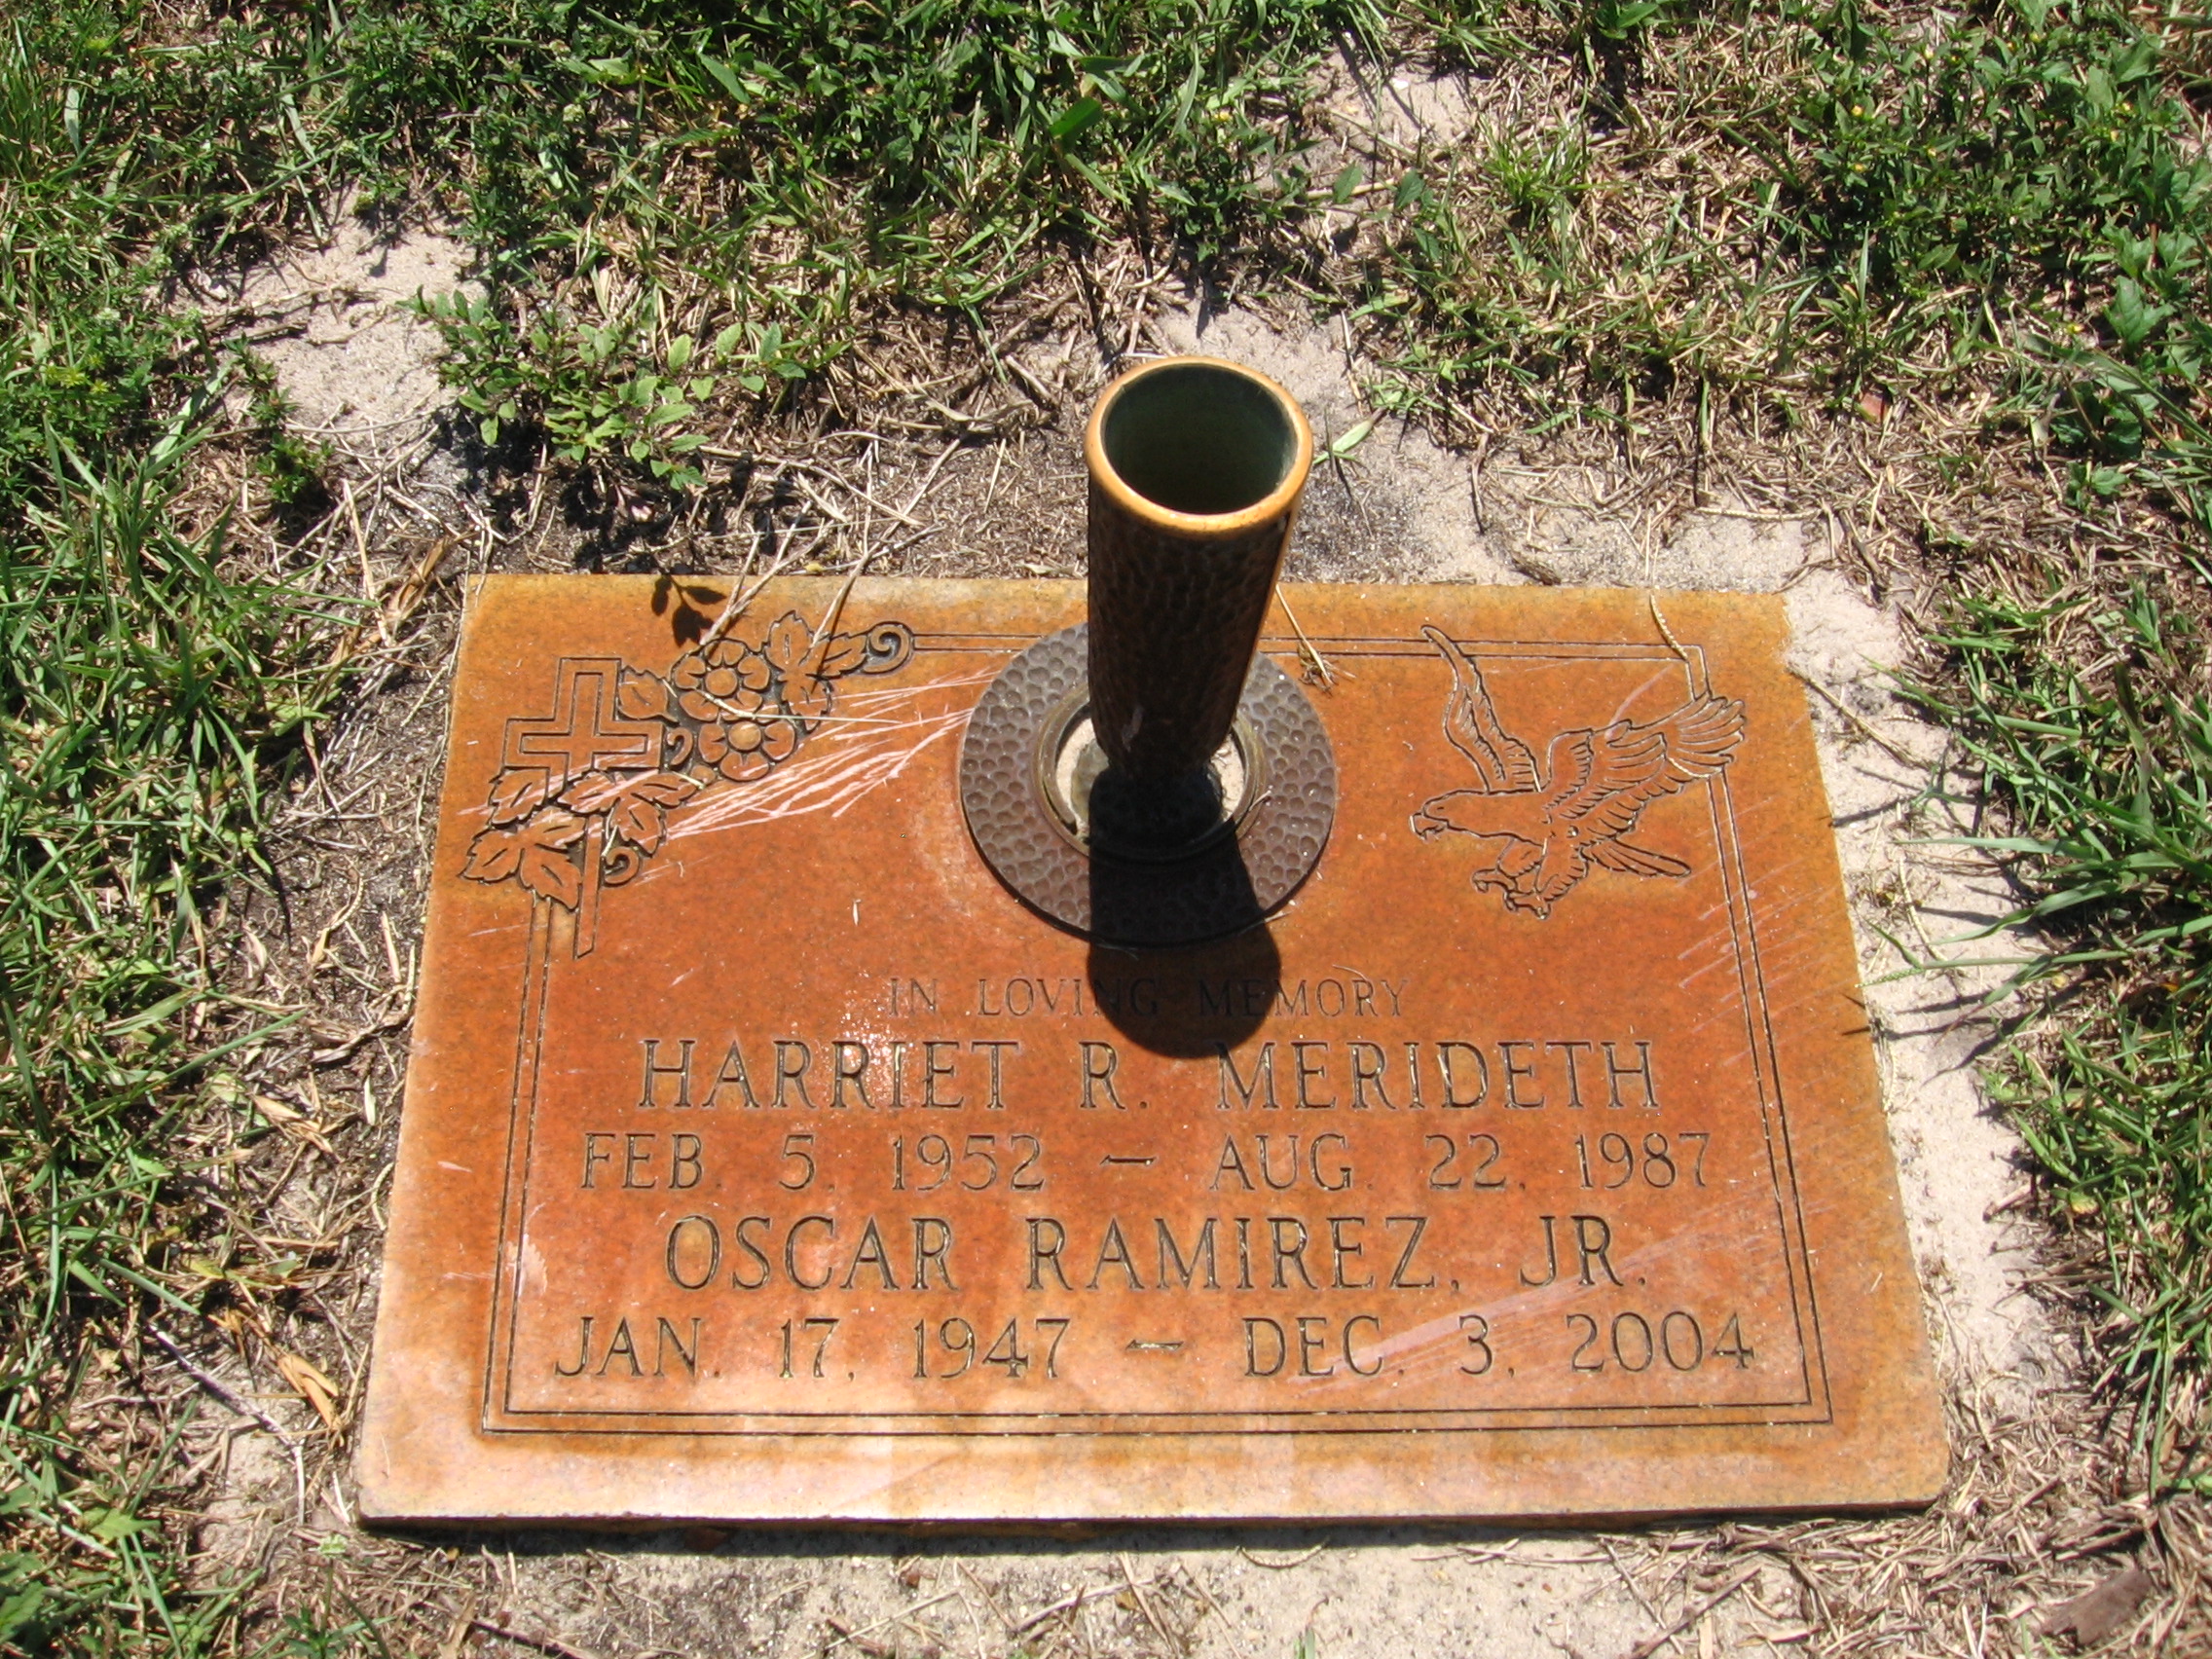 Oscar Ramirez, Jr